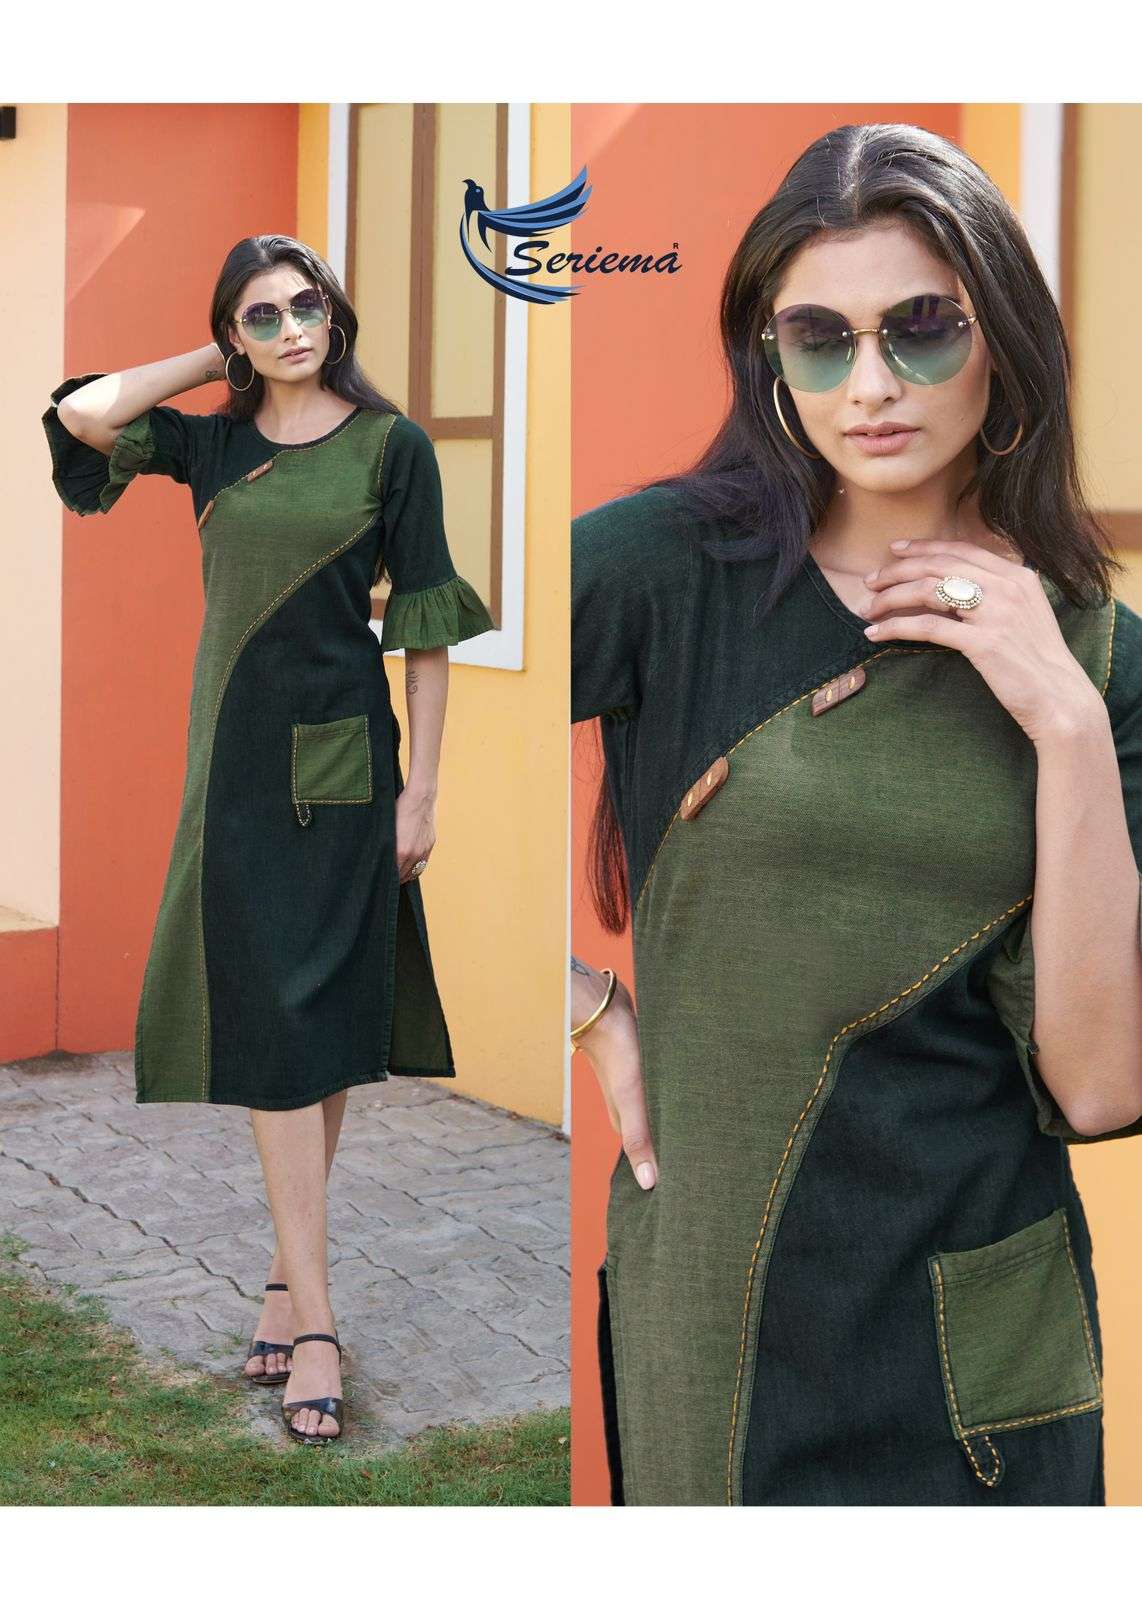 seriema kumb capture 6 cotton innovative look kurti catalog